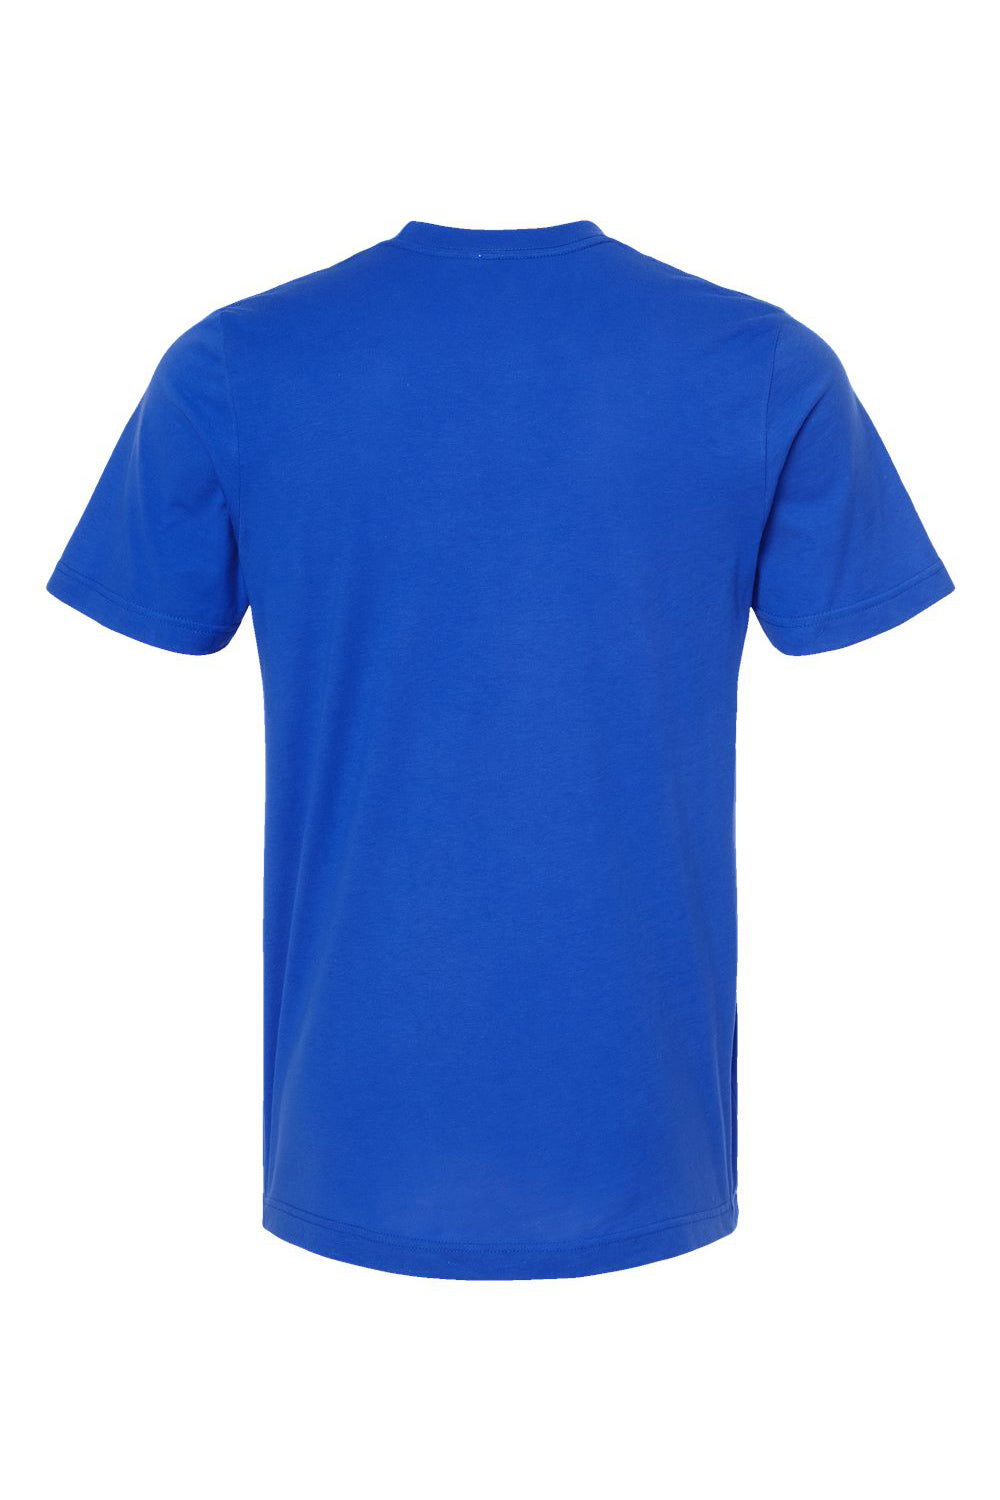 Tultex 502 Mens Premium Short Sleeve Crewneck T-Shirt Royal Blue Flat Back